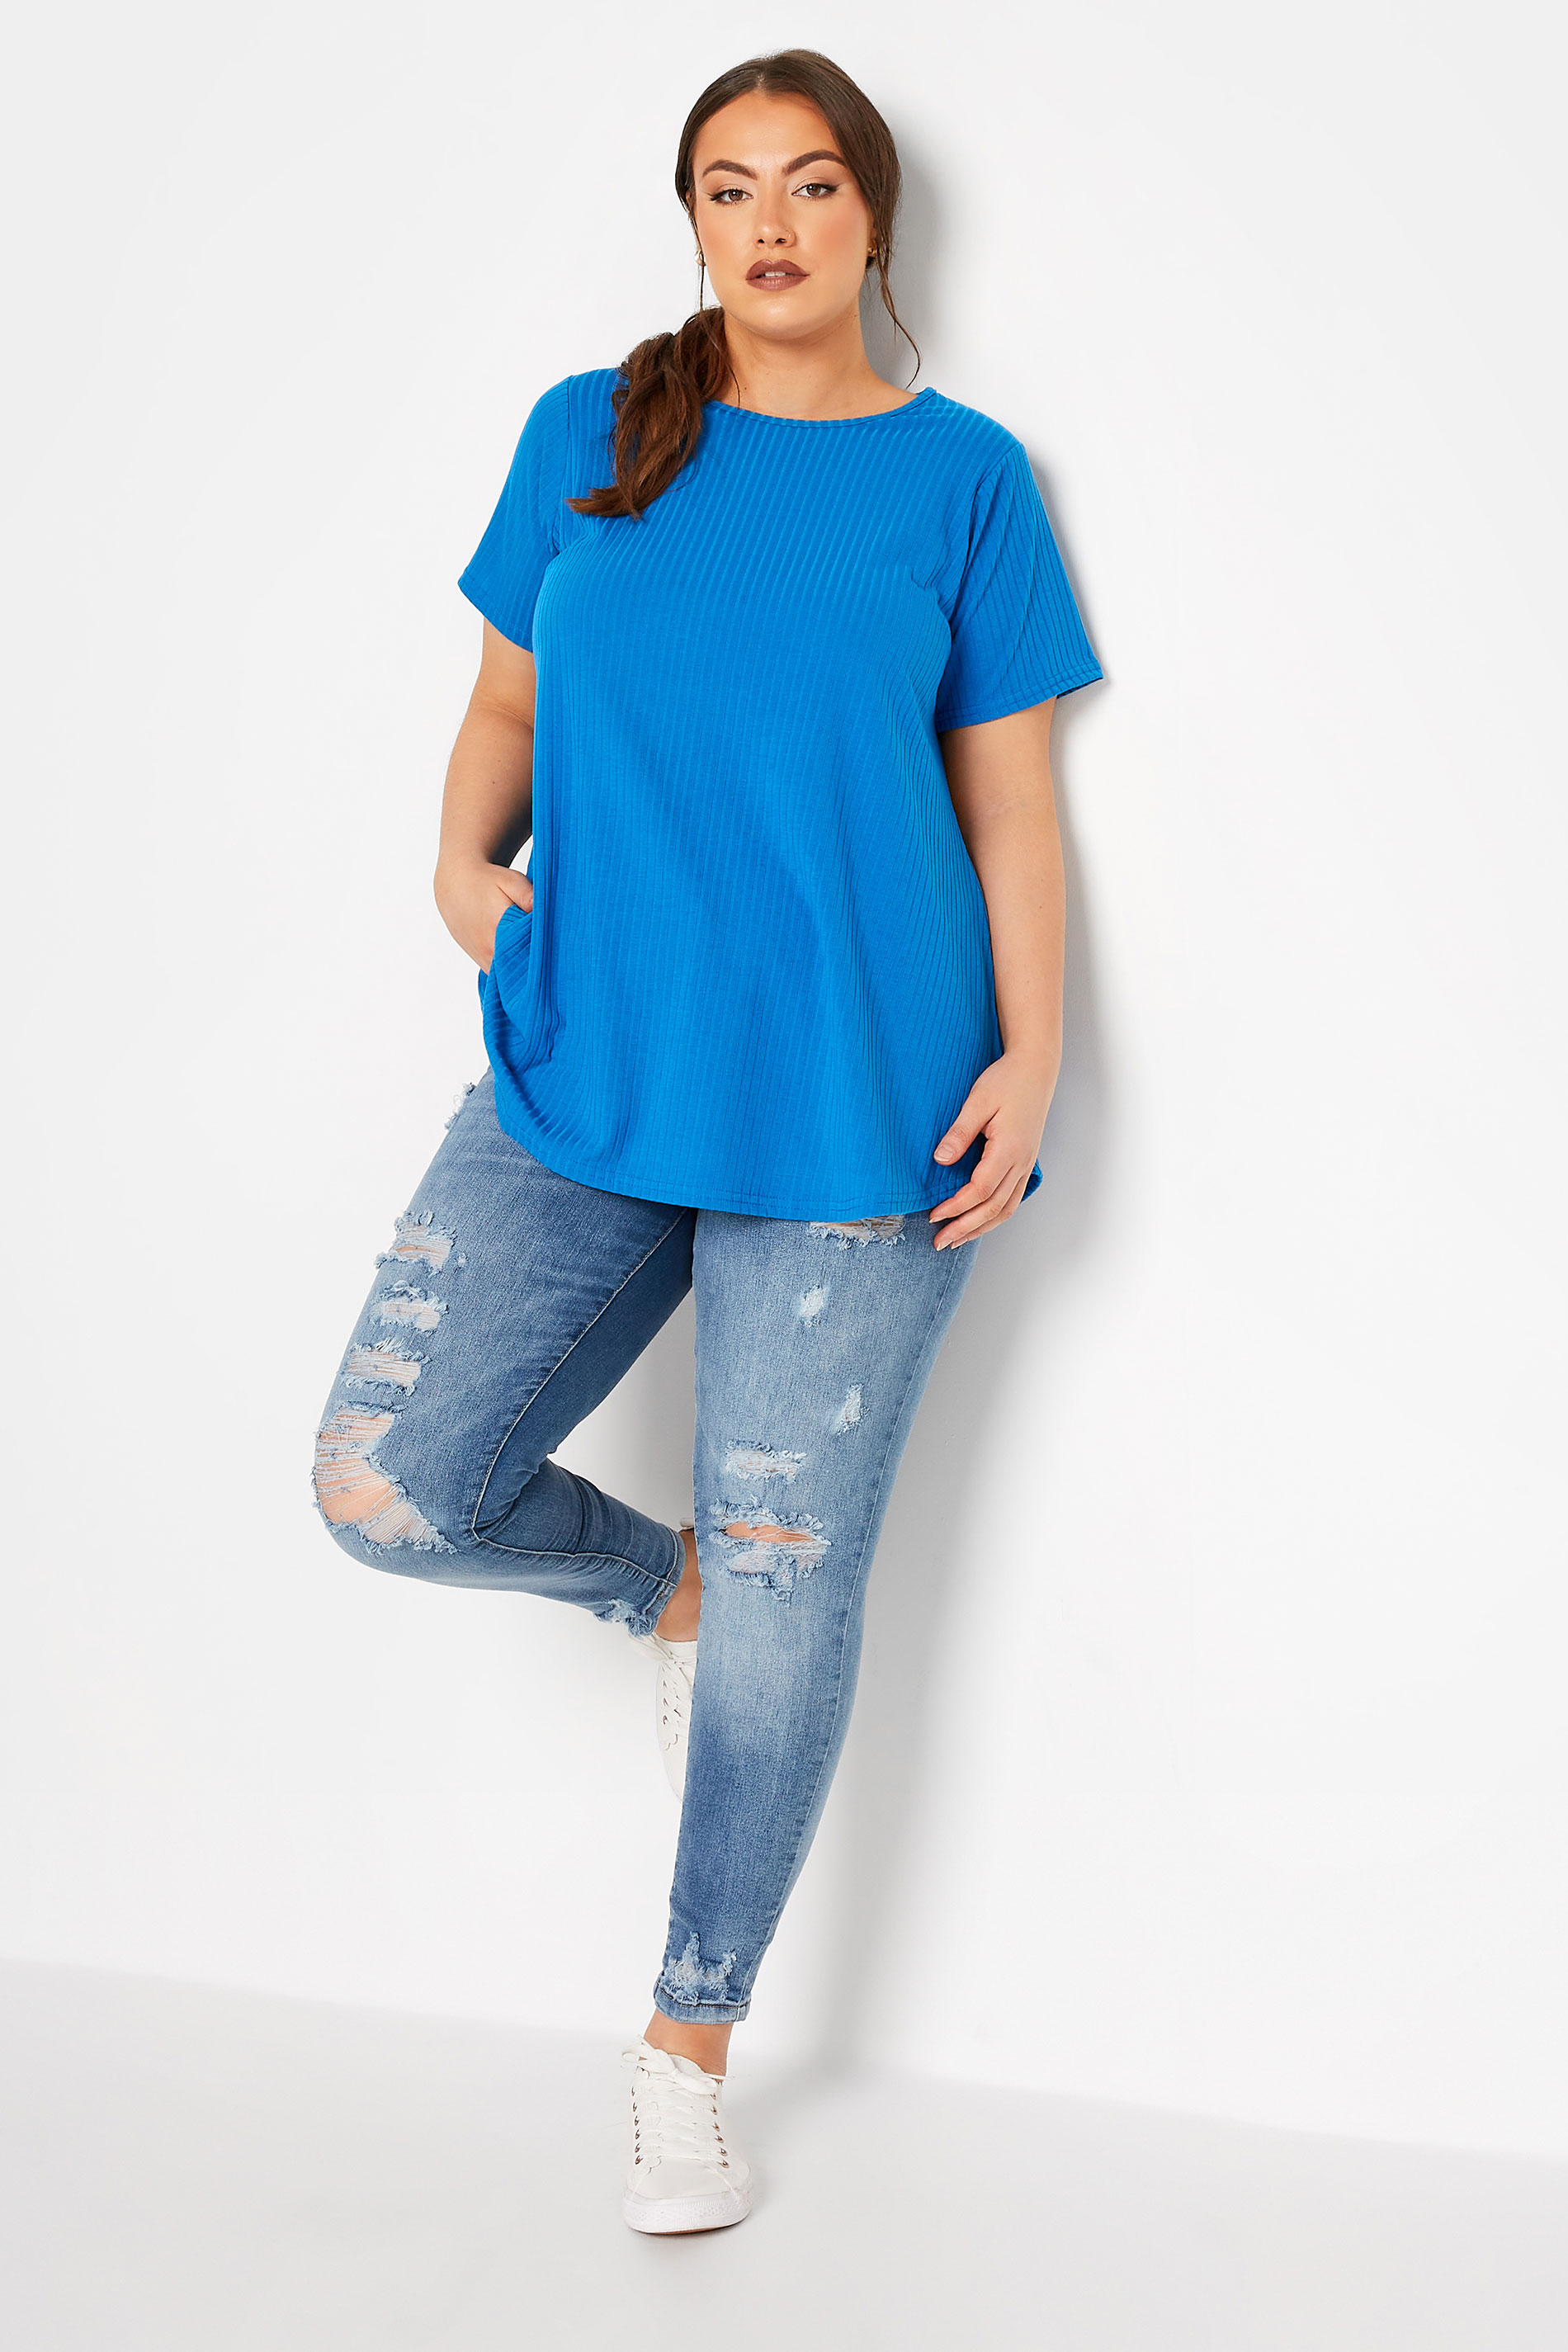 Grande taille  Tops Grande taille  T-Shirts | LIMITED COLLECTION - Top Bleu Roi Nervuré Style Volanté - GX44322